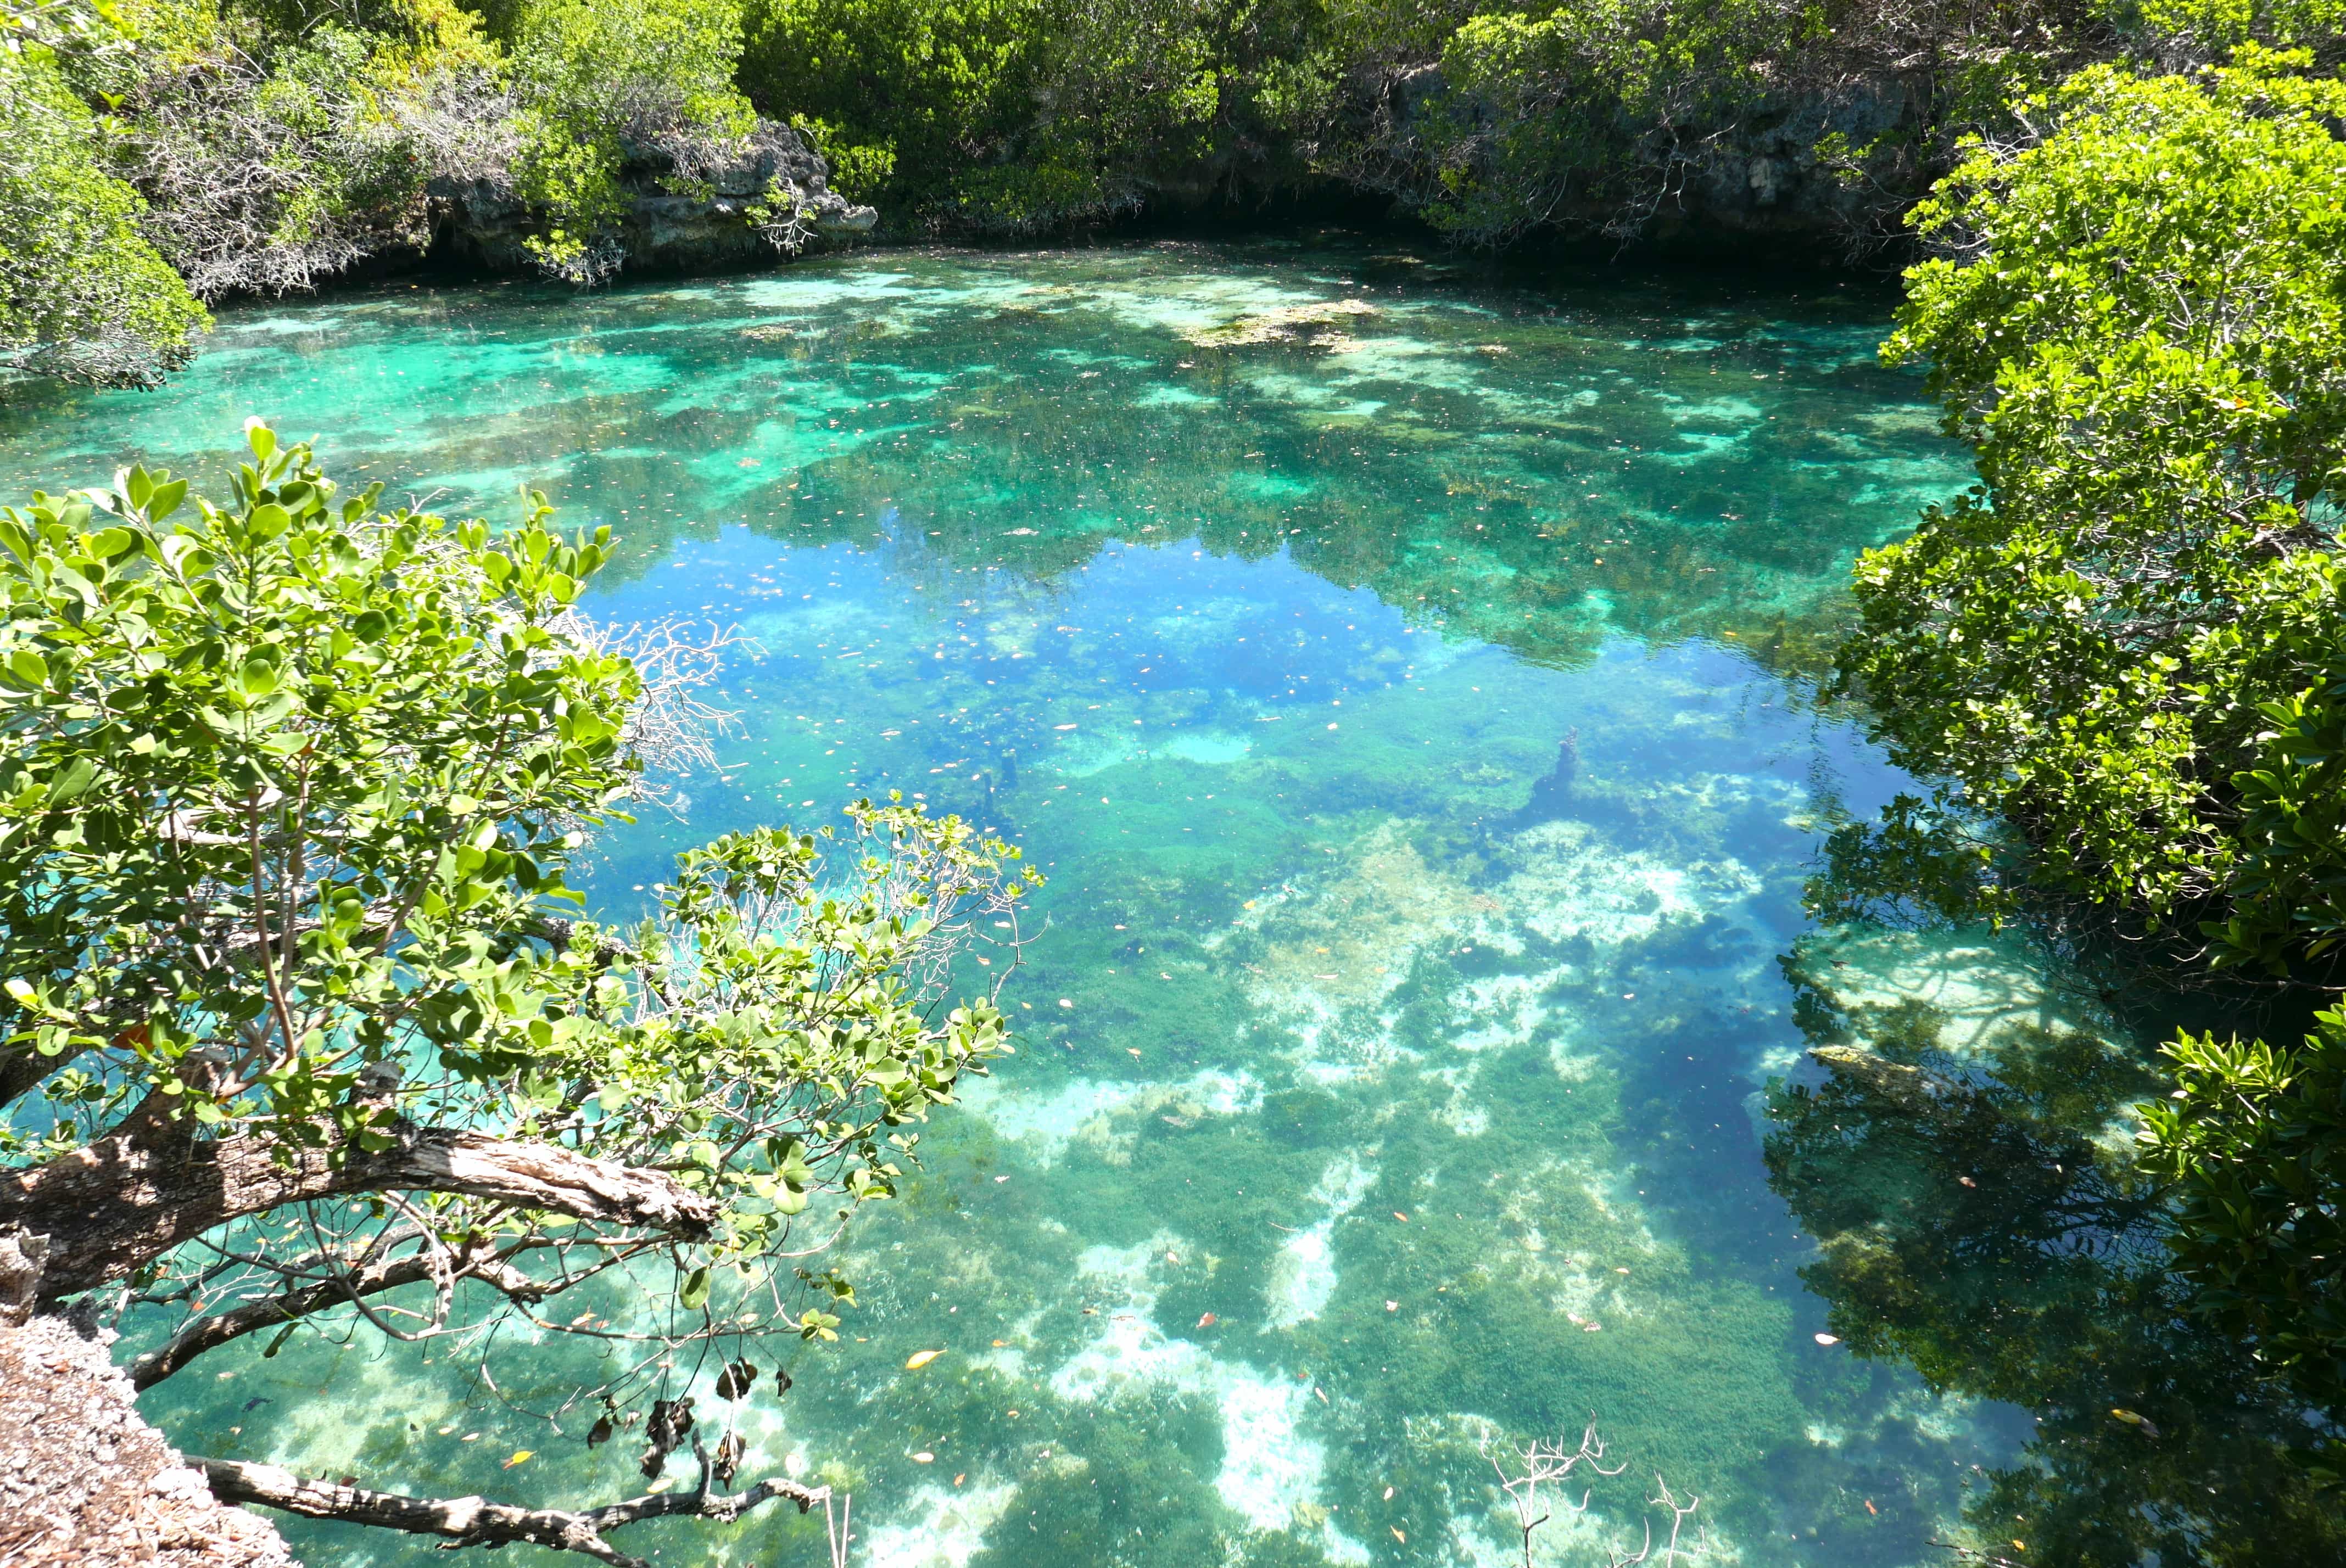 Best Thing To Do In Mafia Island - Swim In The Hidden Lagoon